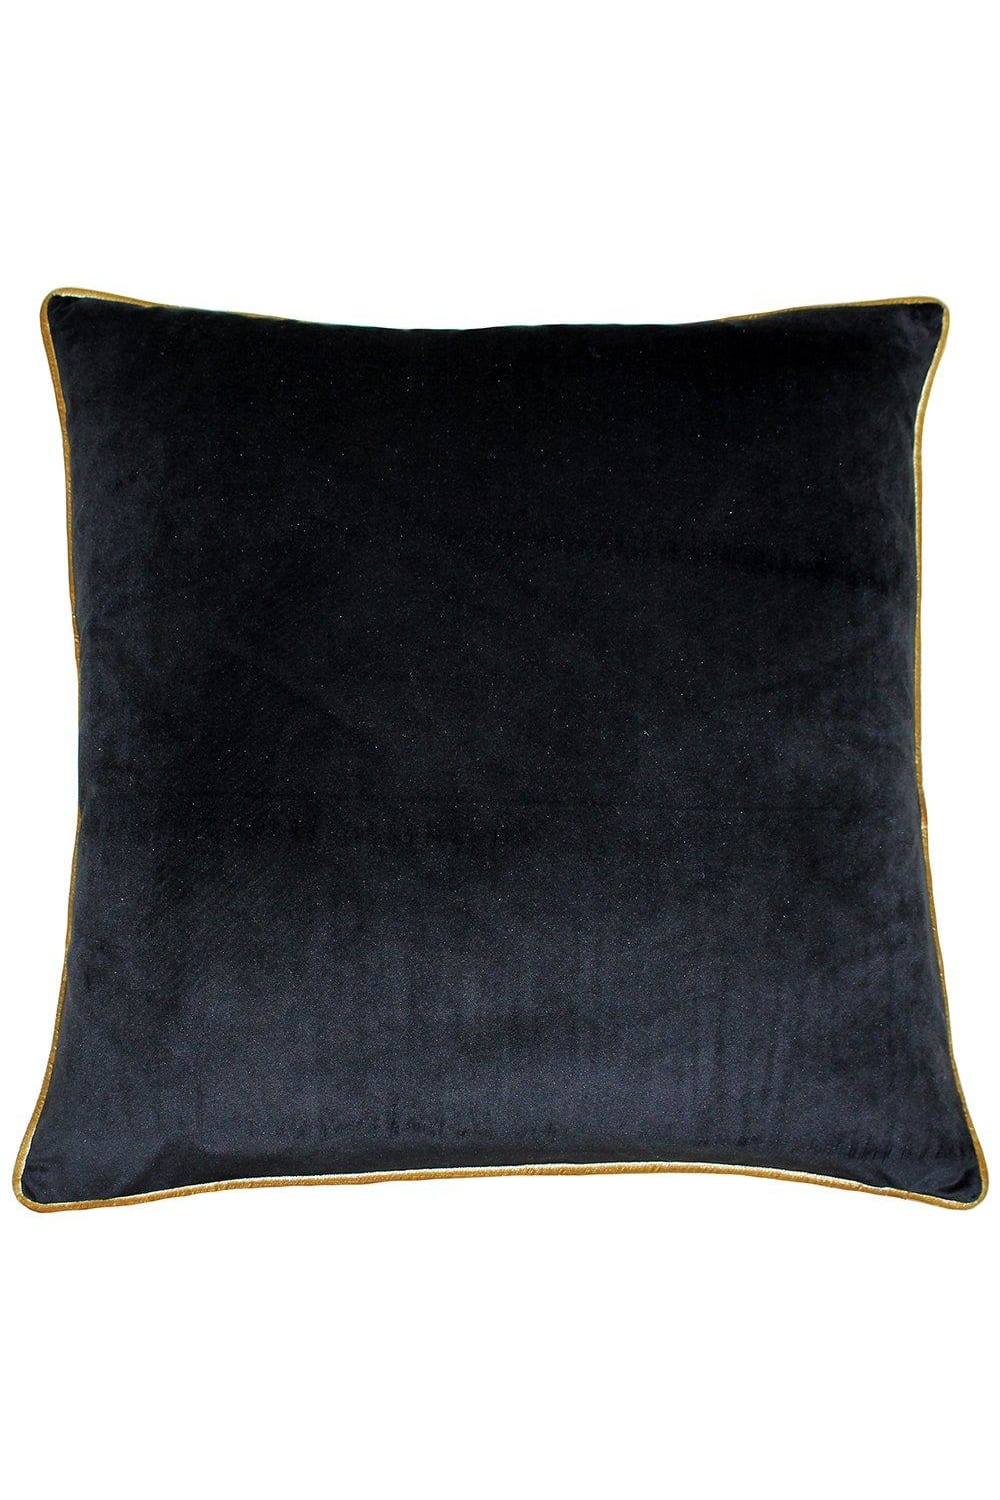 Paoletti Meridian Cushion Cover (Black/Gold) (21.6 x 21.6inch)